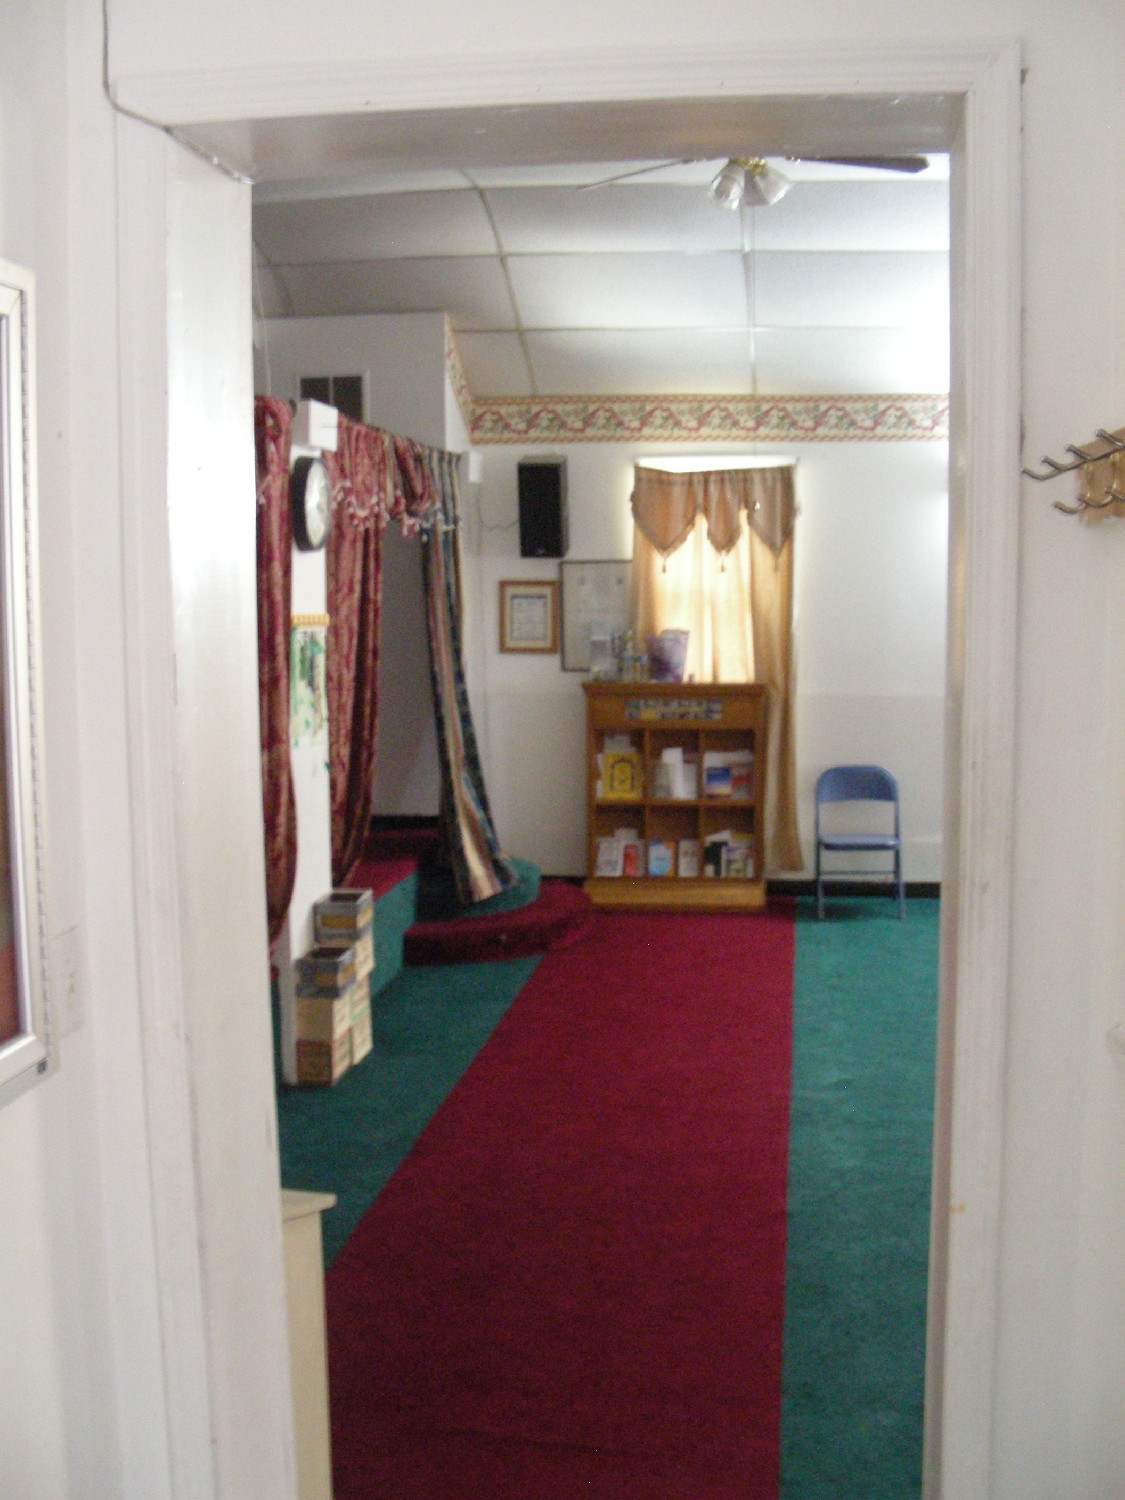 Entrance to the prayer hall